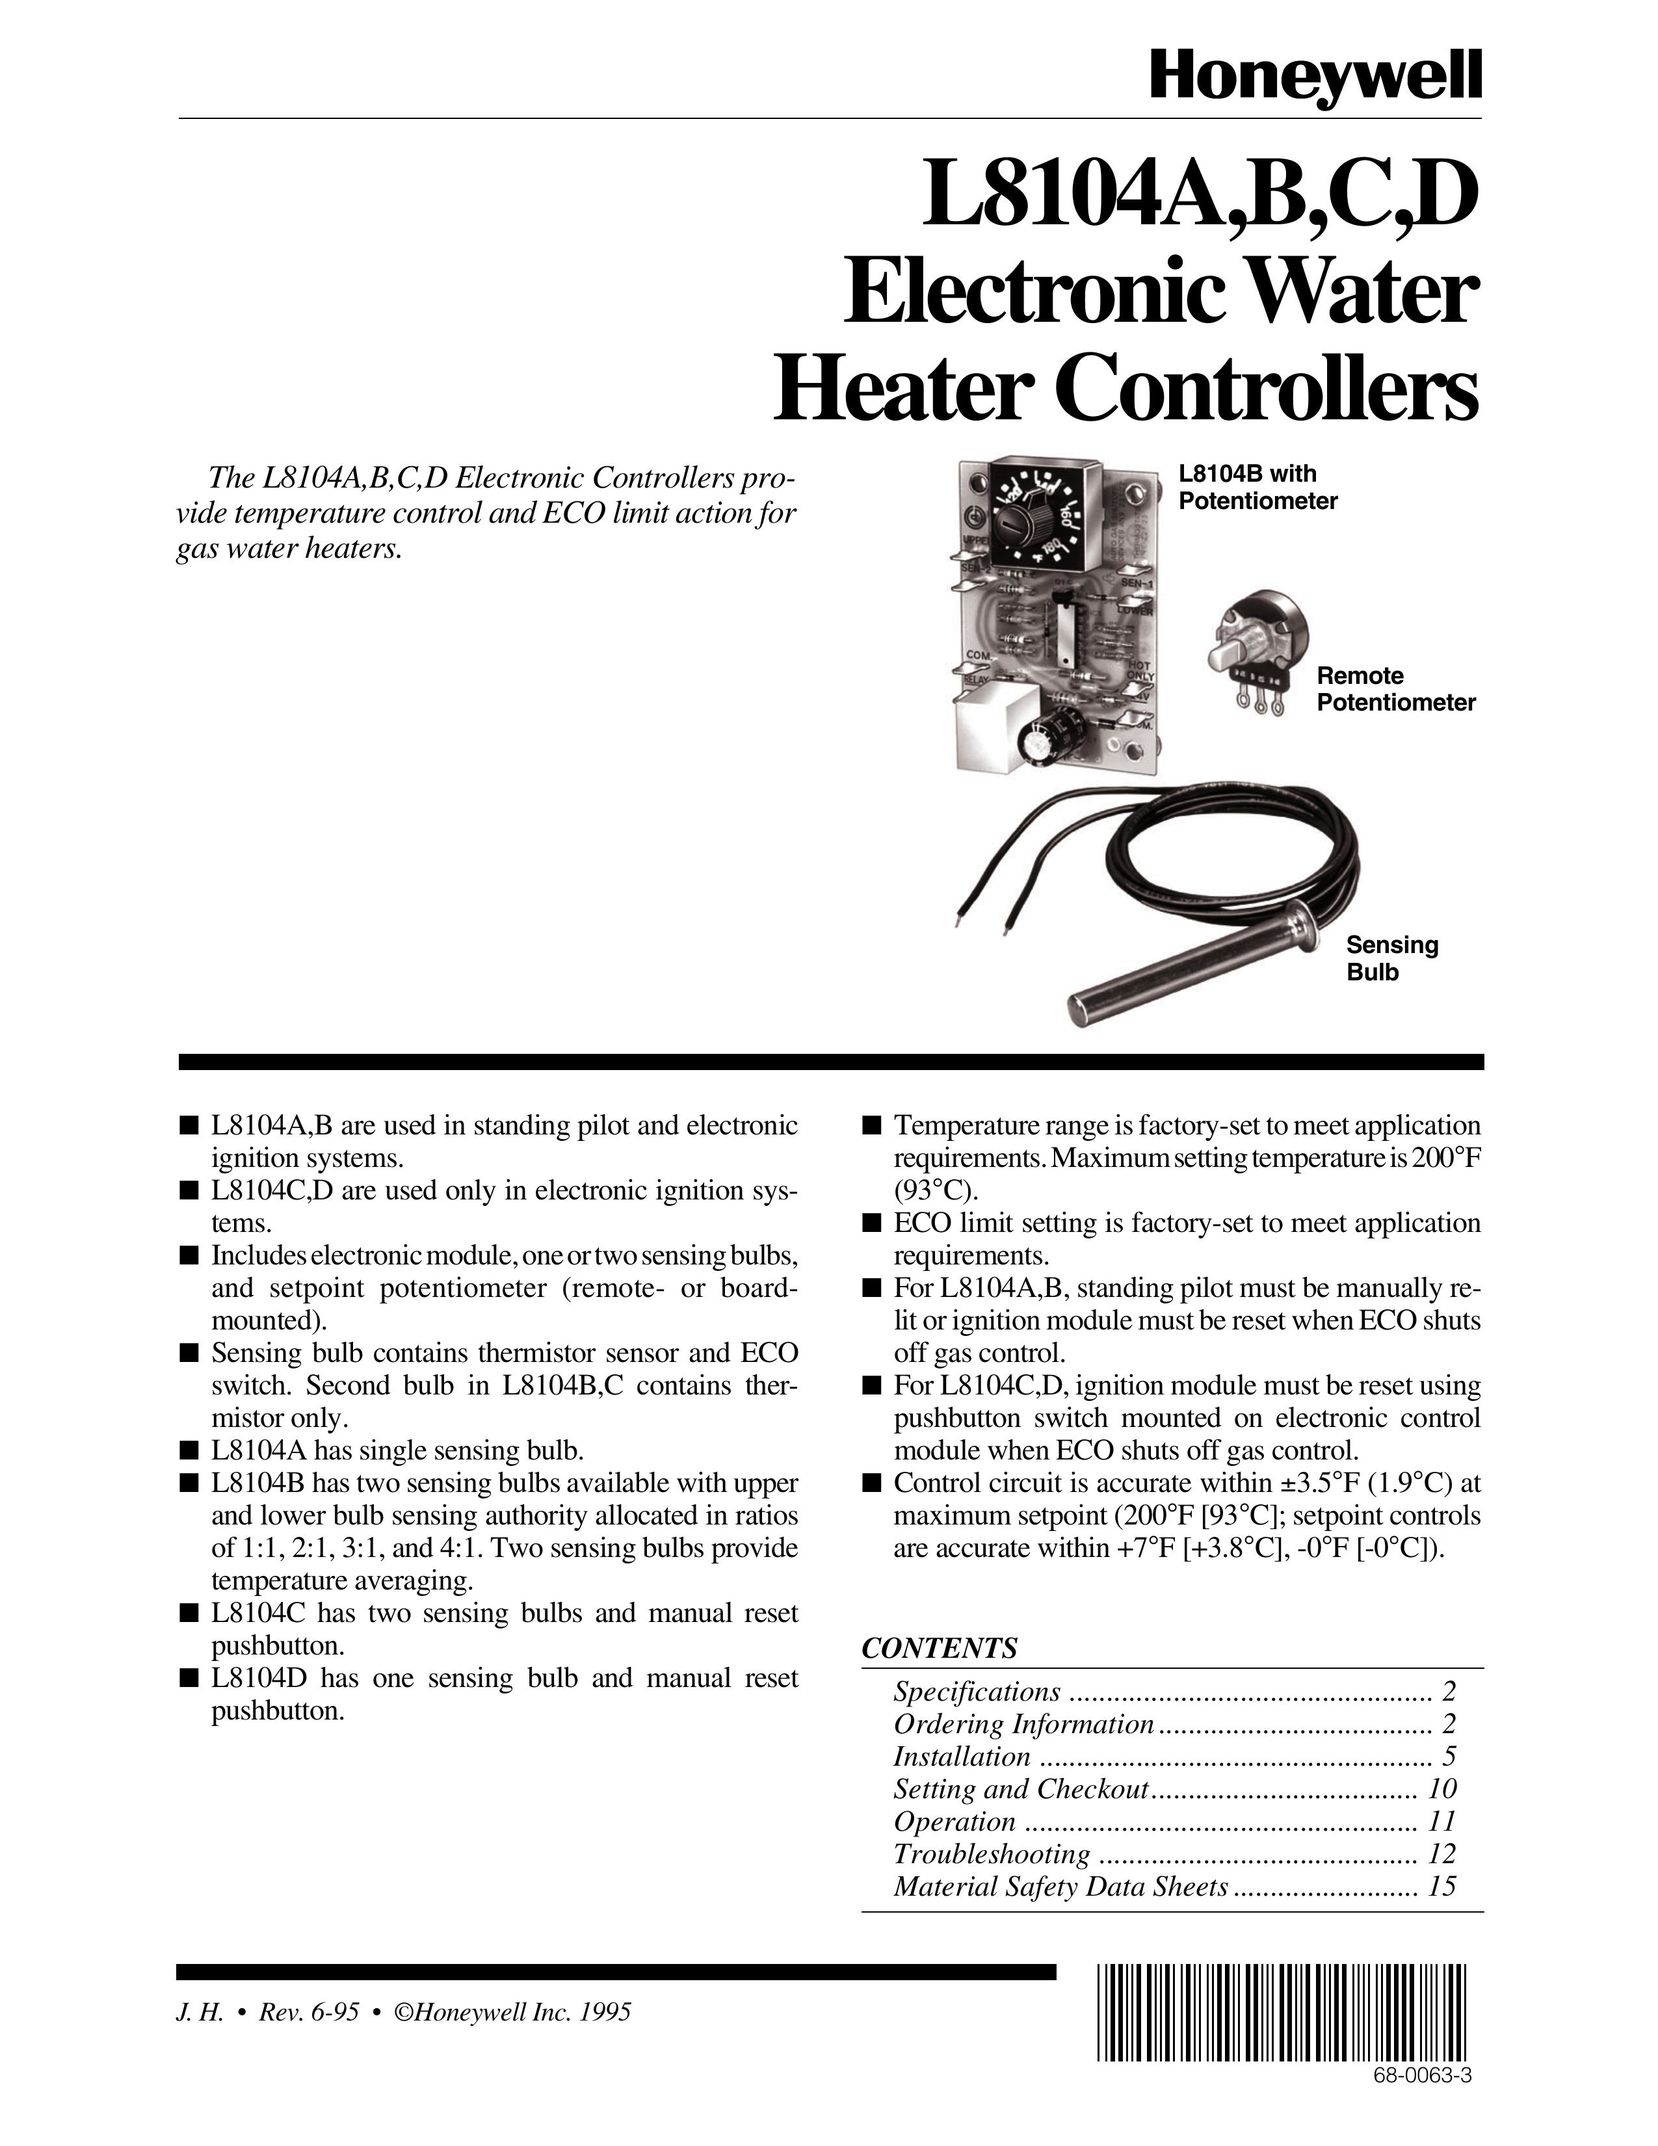 Honeywell L8104C Water Heater User Manual